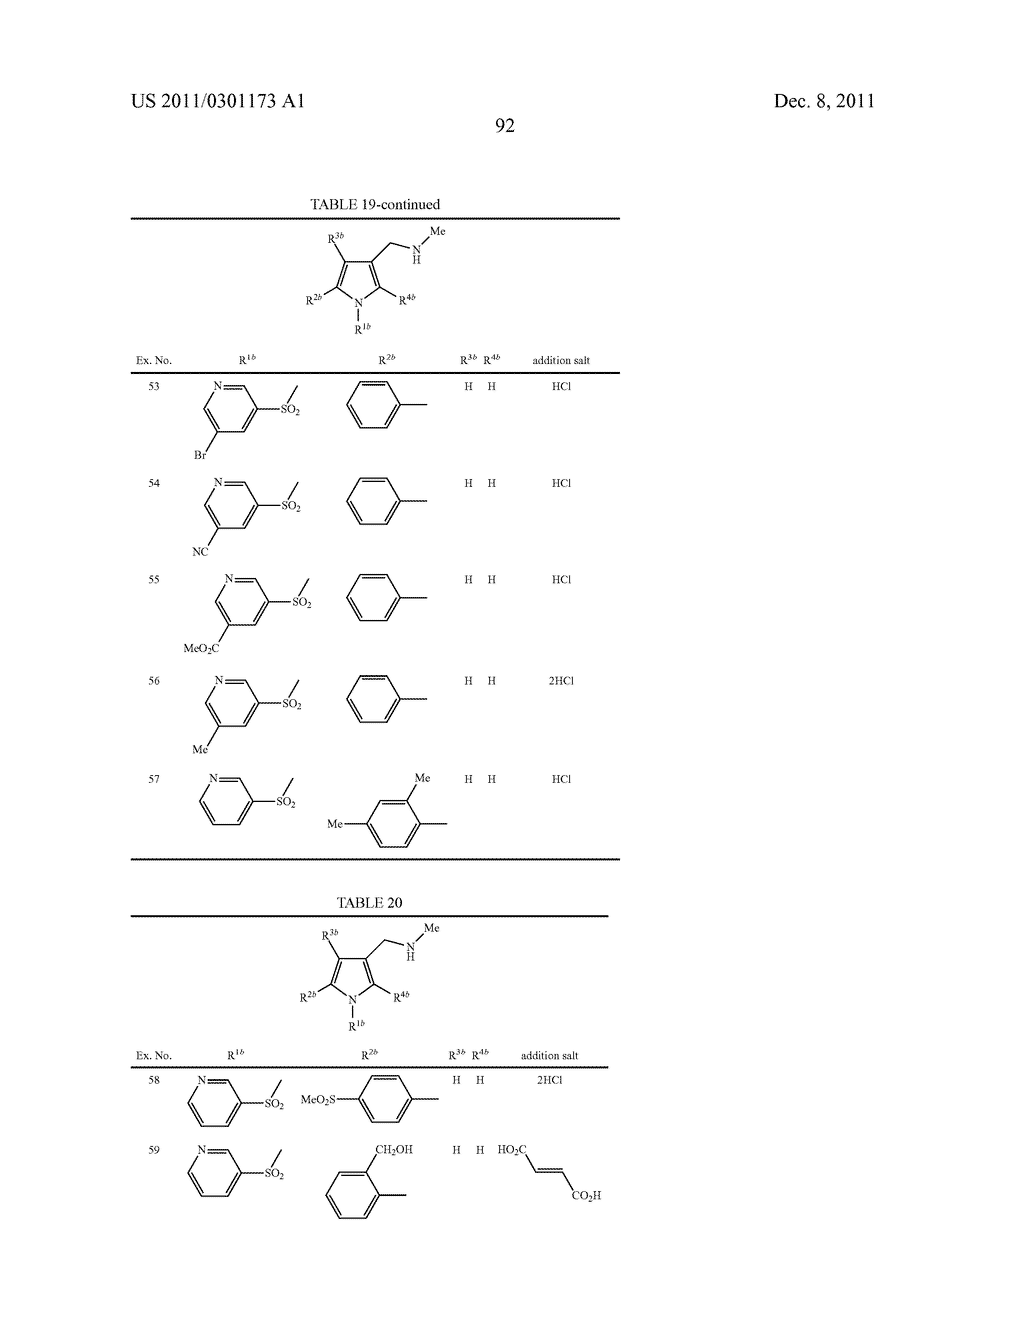 1-HETEROCYCLYLSULFONYL, 3-AMINOMETHYL, 5- (HETERO-) ARYL SUBSTITUTED     1-H-PYRROLE DERIVATIVES AS ACID SECRETION INHIBITORS - diagram, schematic, and image 93